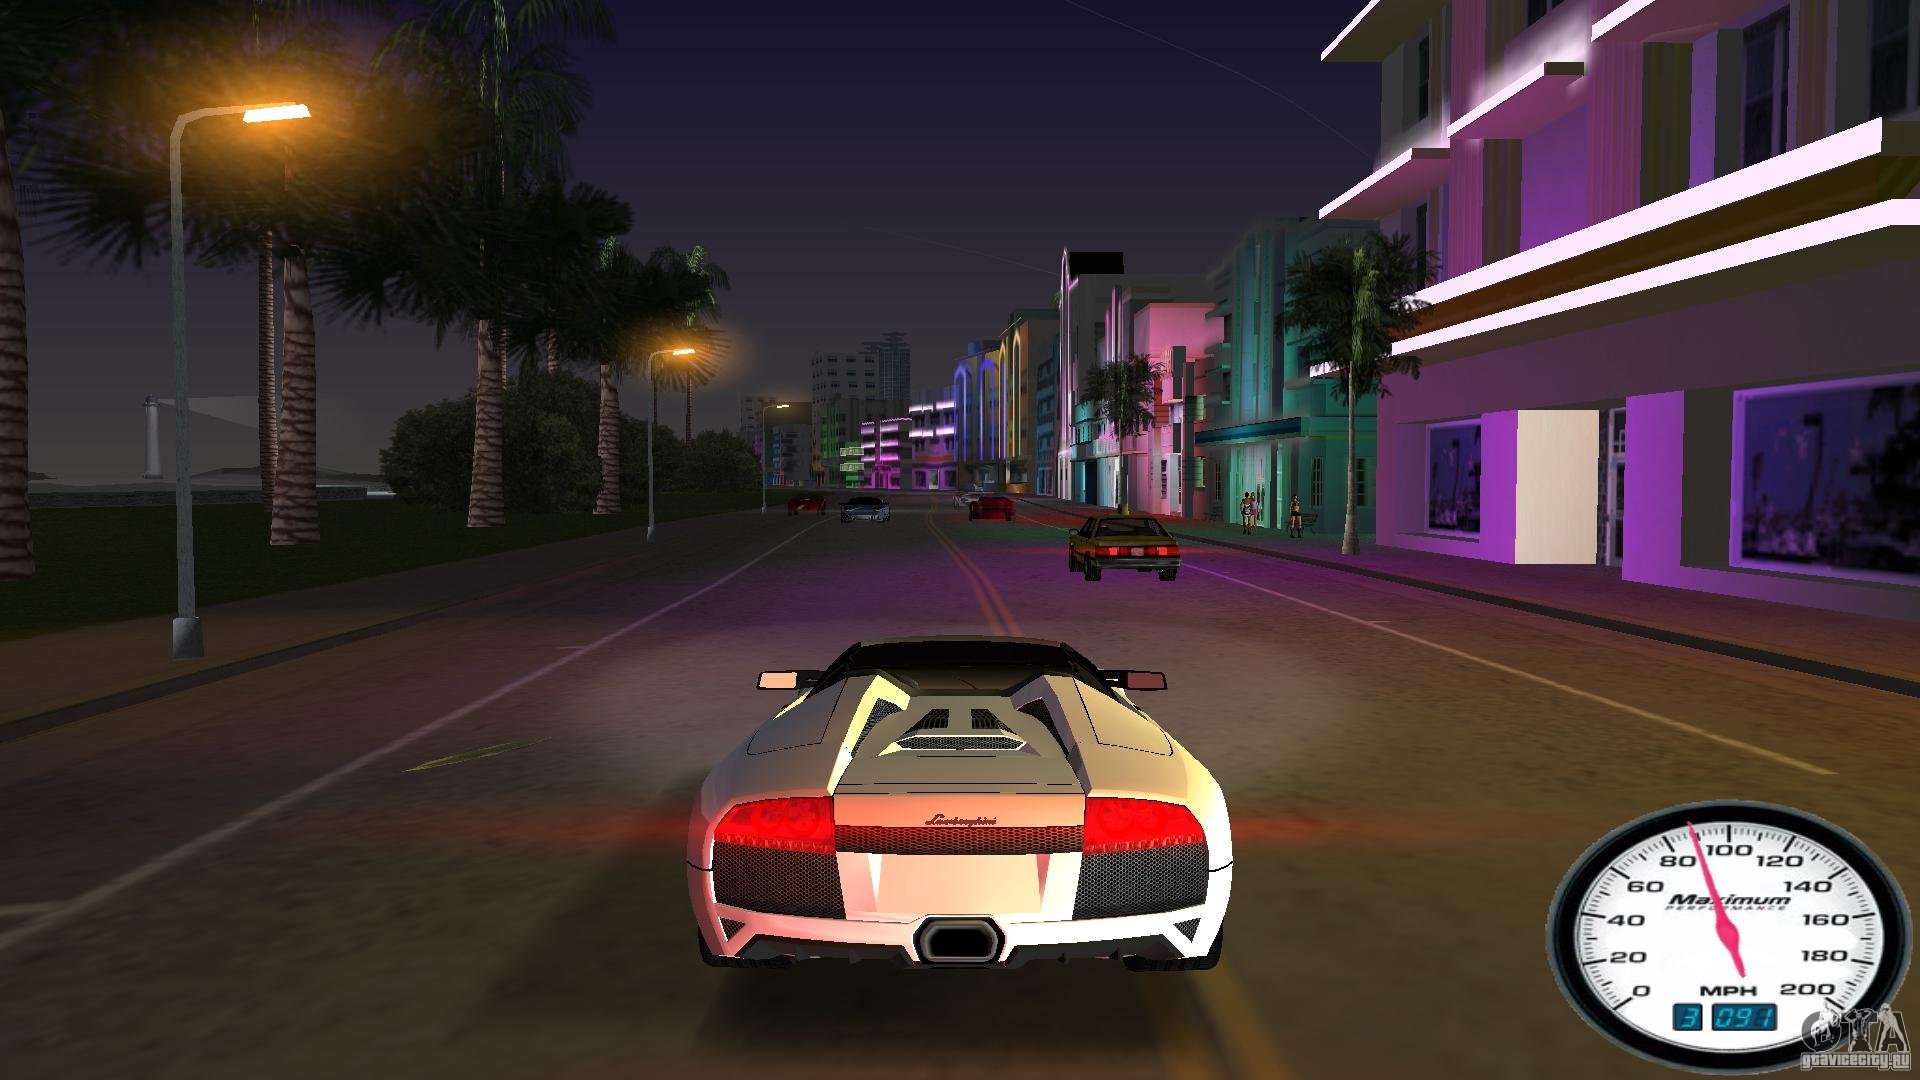 Speedometer for GTA Vice City